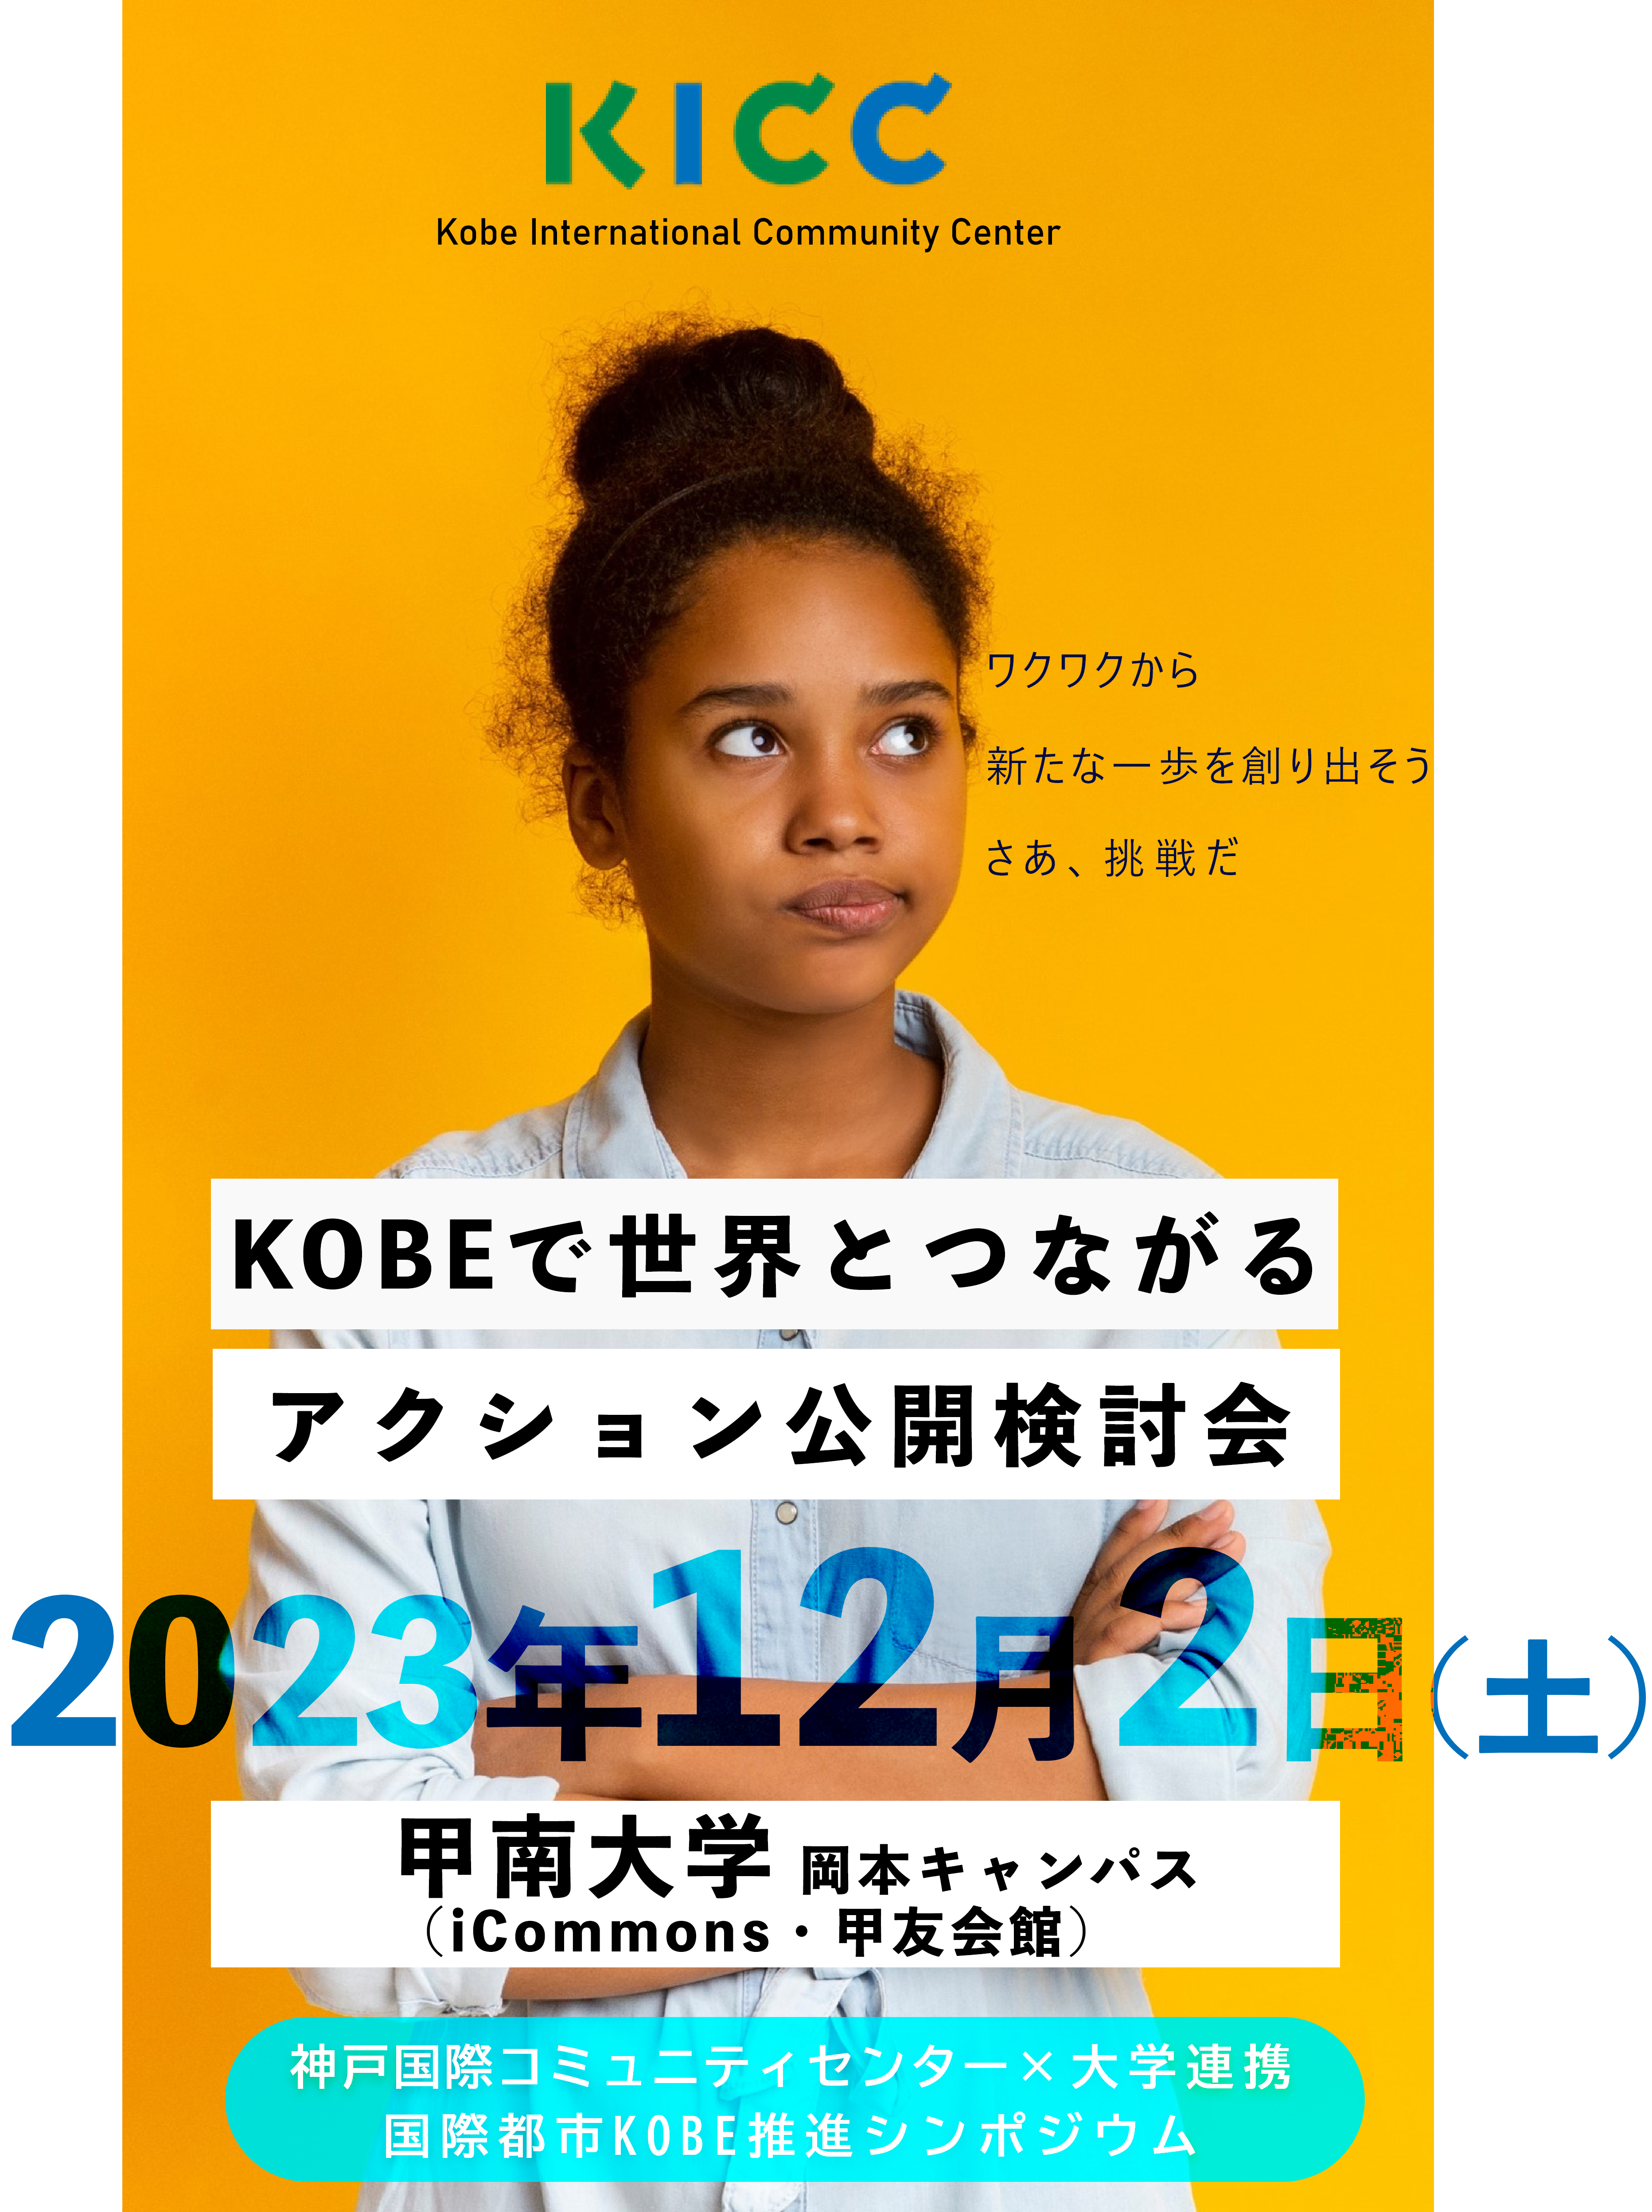 KOBEで世界とつながるアクション公開検討会 2023年12月2日(土) 甲南大学 岡本キャンパス（iCommons・甲友会館）神戸国際コミュニティセンター×大学連携 国際都市KOBE推進シンポジウム